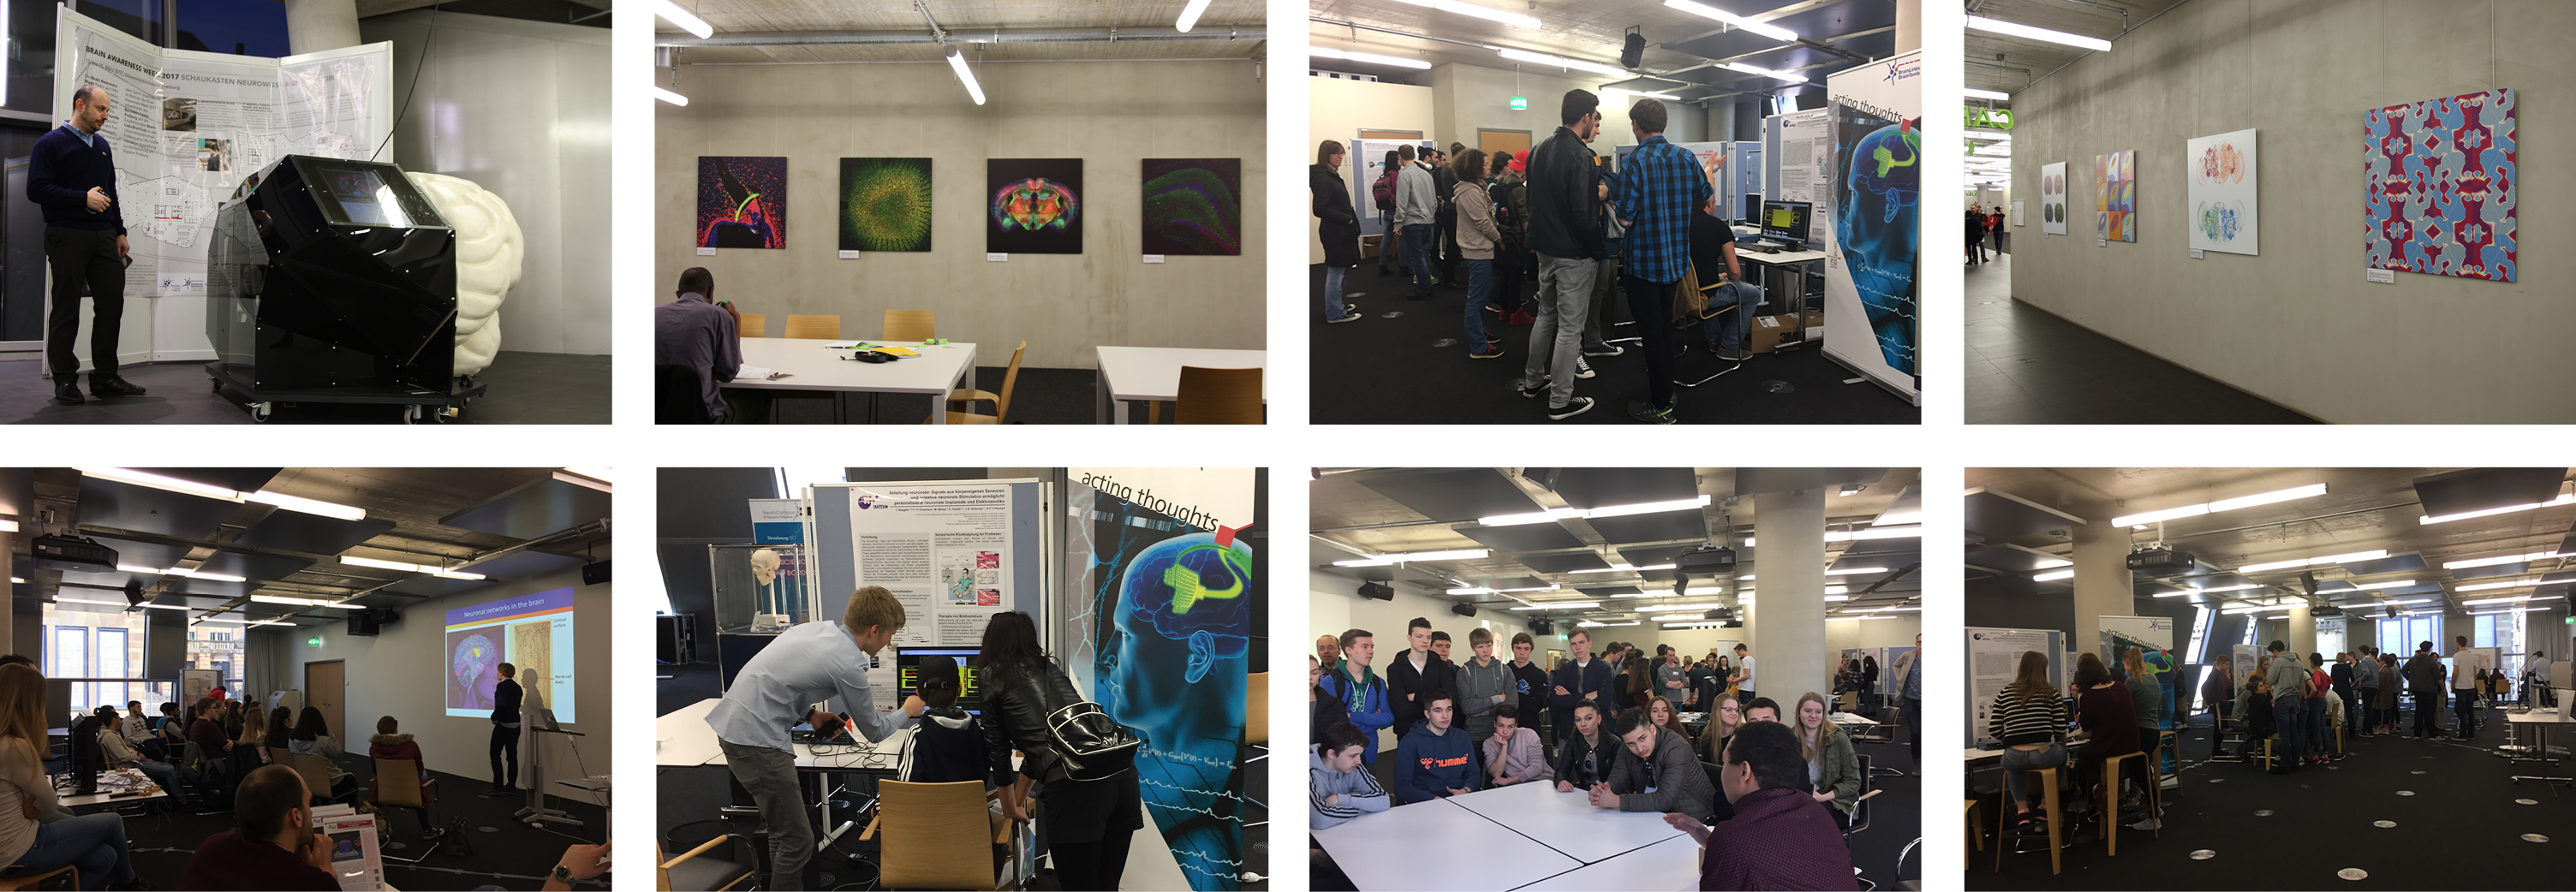 Impressions of Brain Awareness Week 2017 in Freiburg